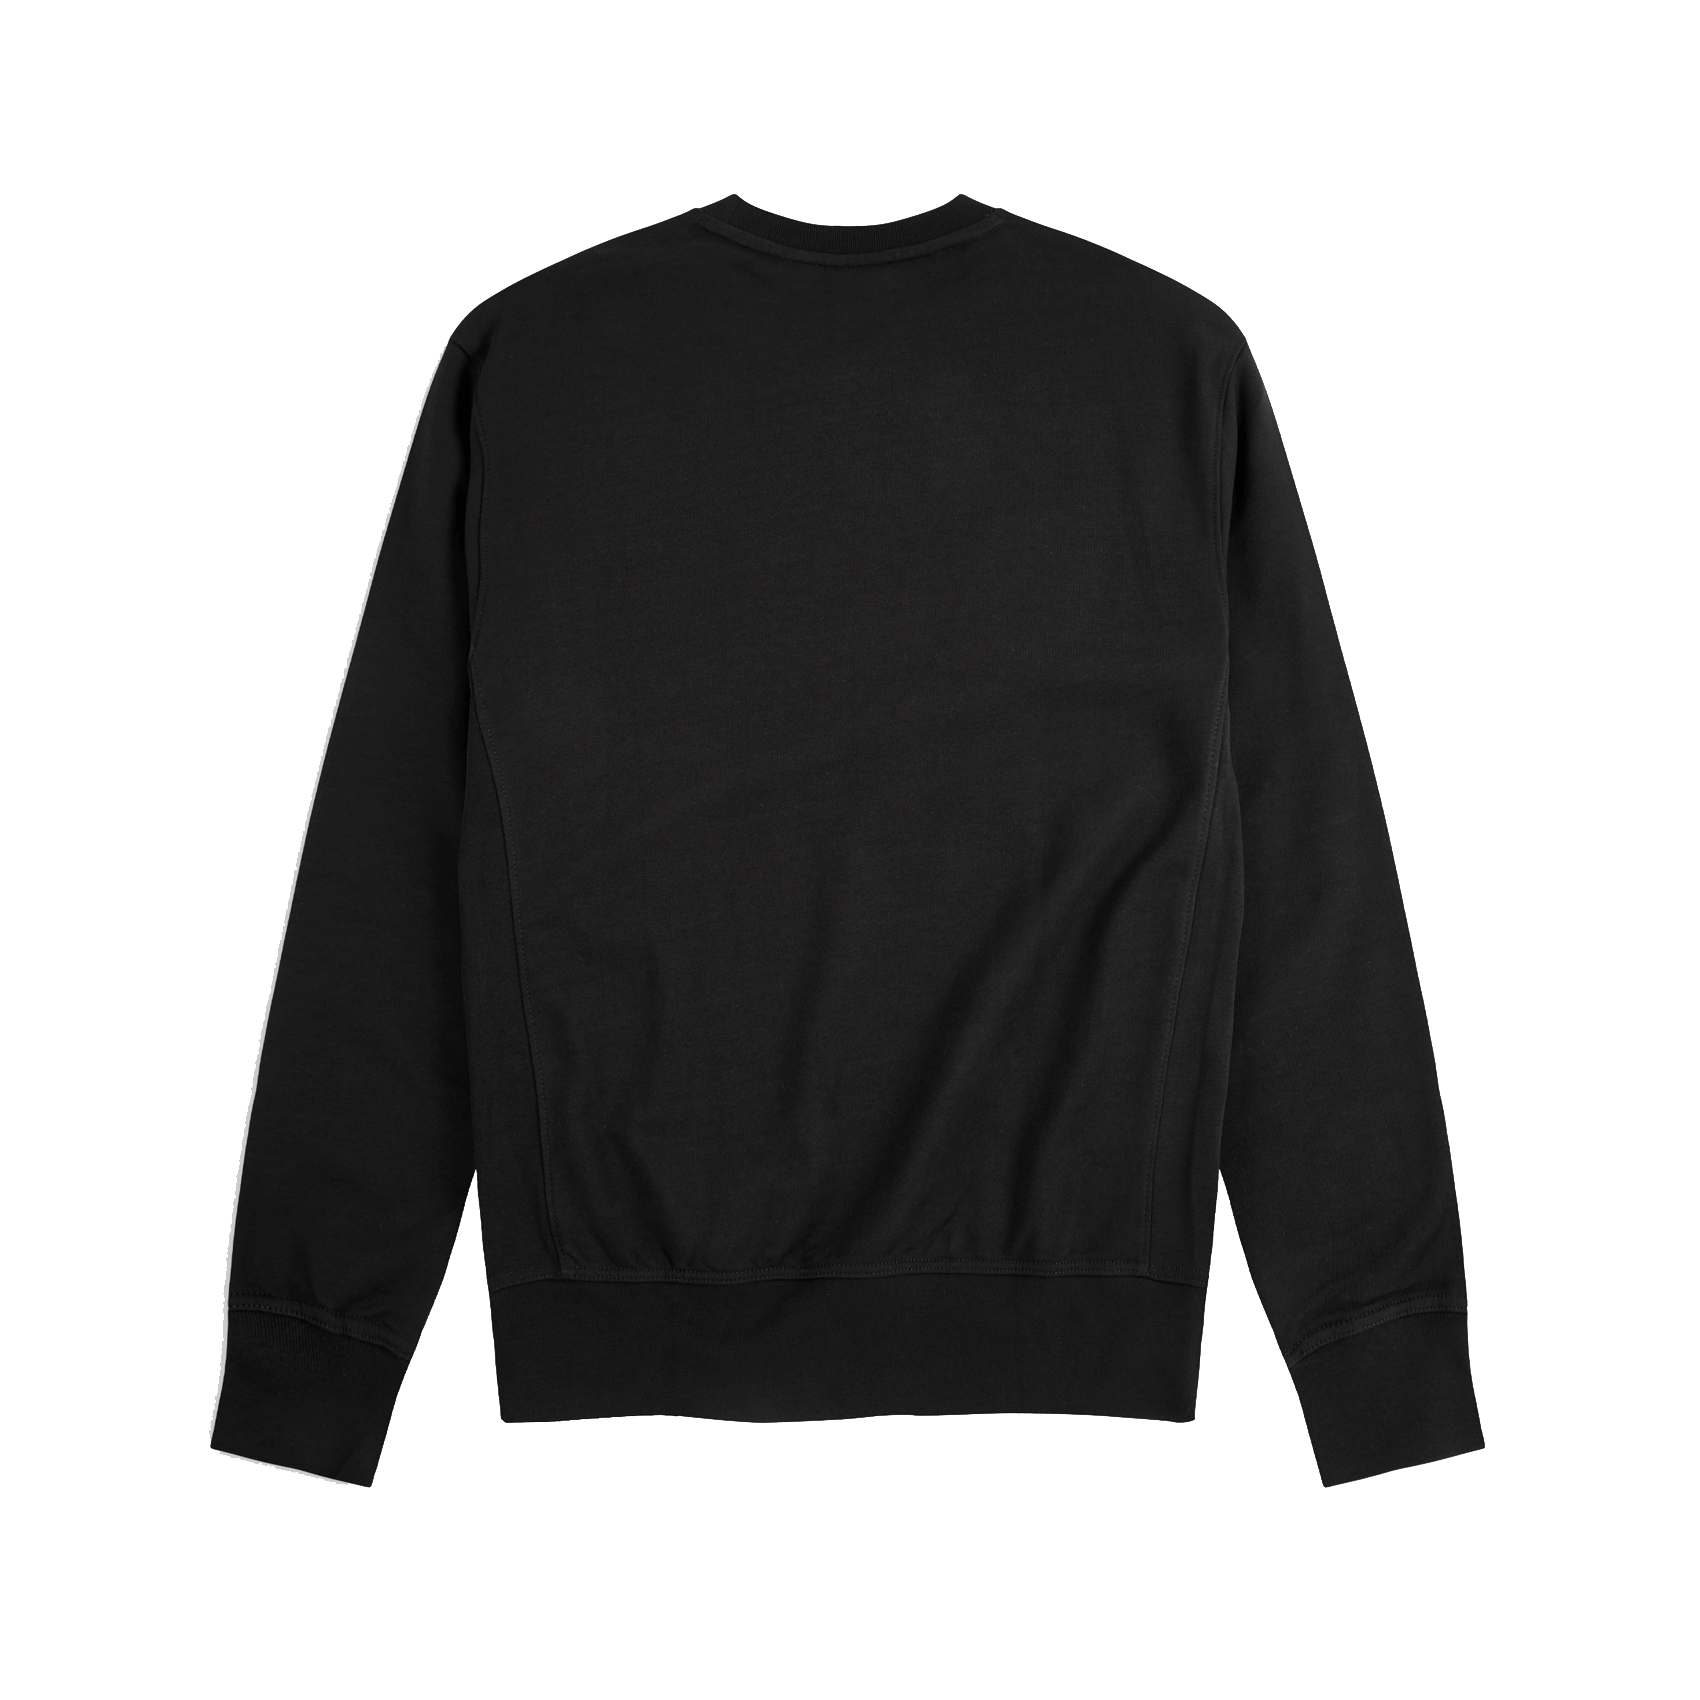 Mount Vista Sweatshirt - Black.